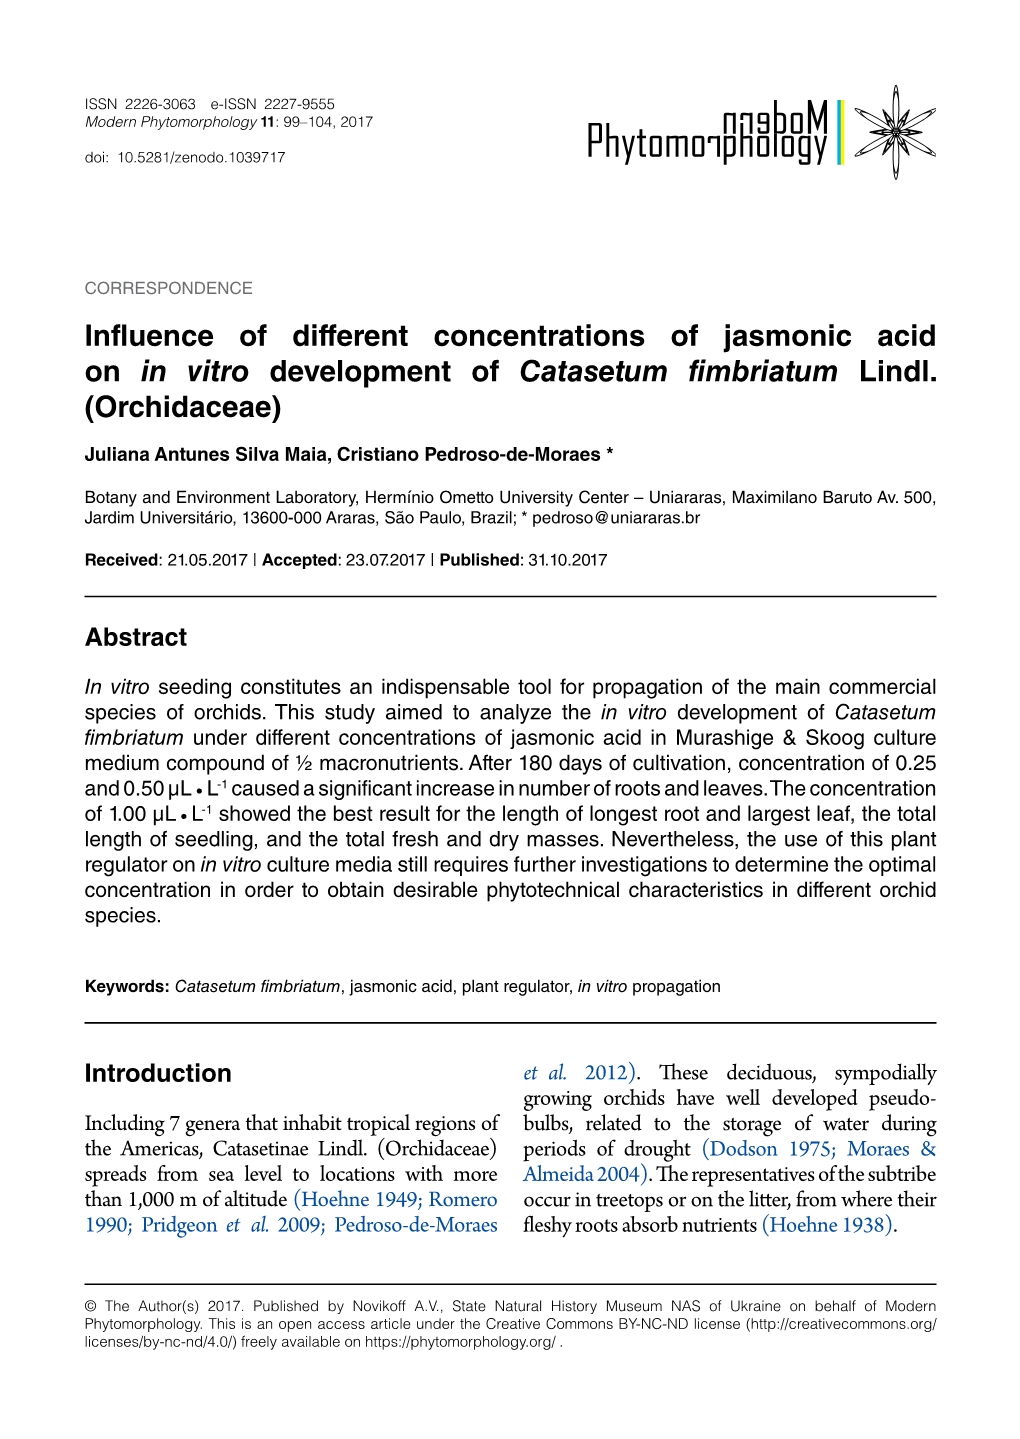 Influence of Different Concentrations of Jasmonic Acid on in Vitro Development of Catasetum Fimbriatum Lindl